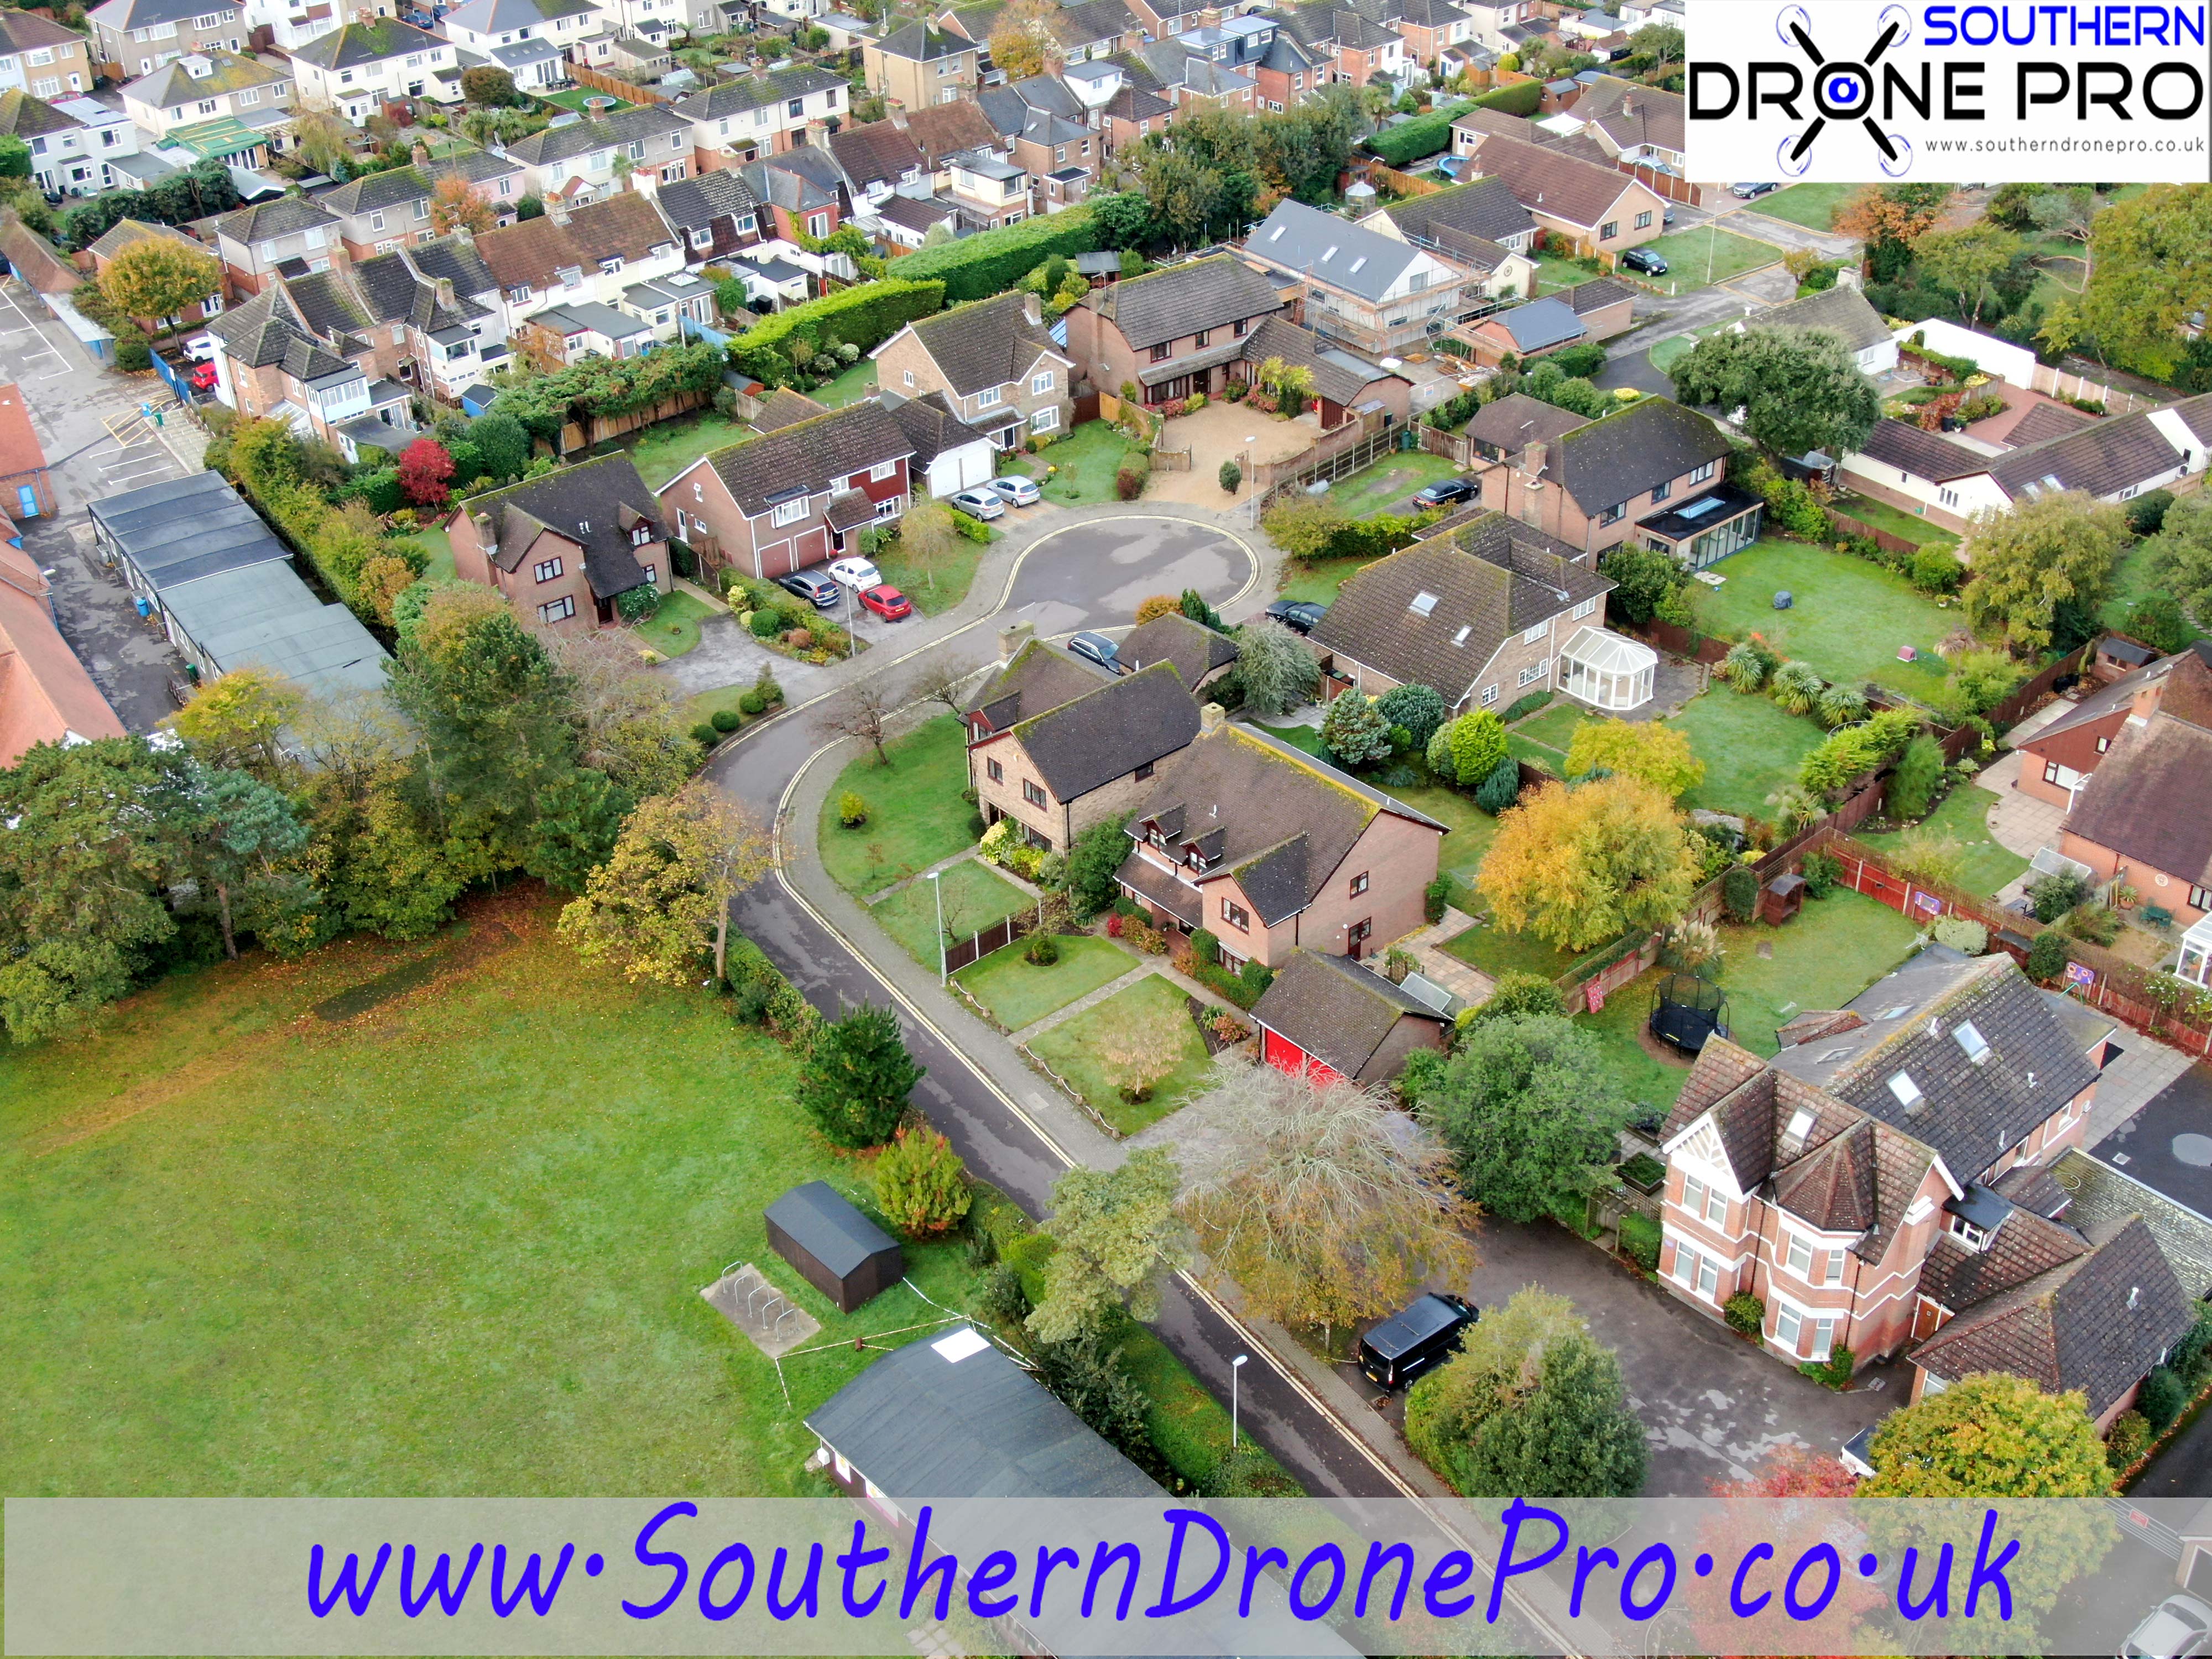 Southern Drone Pro